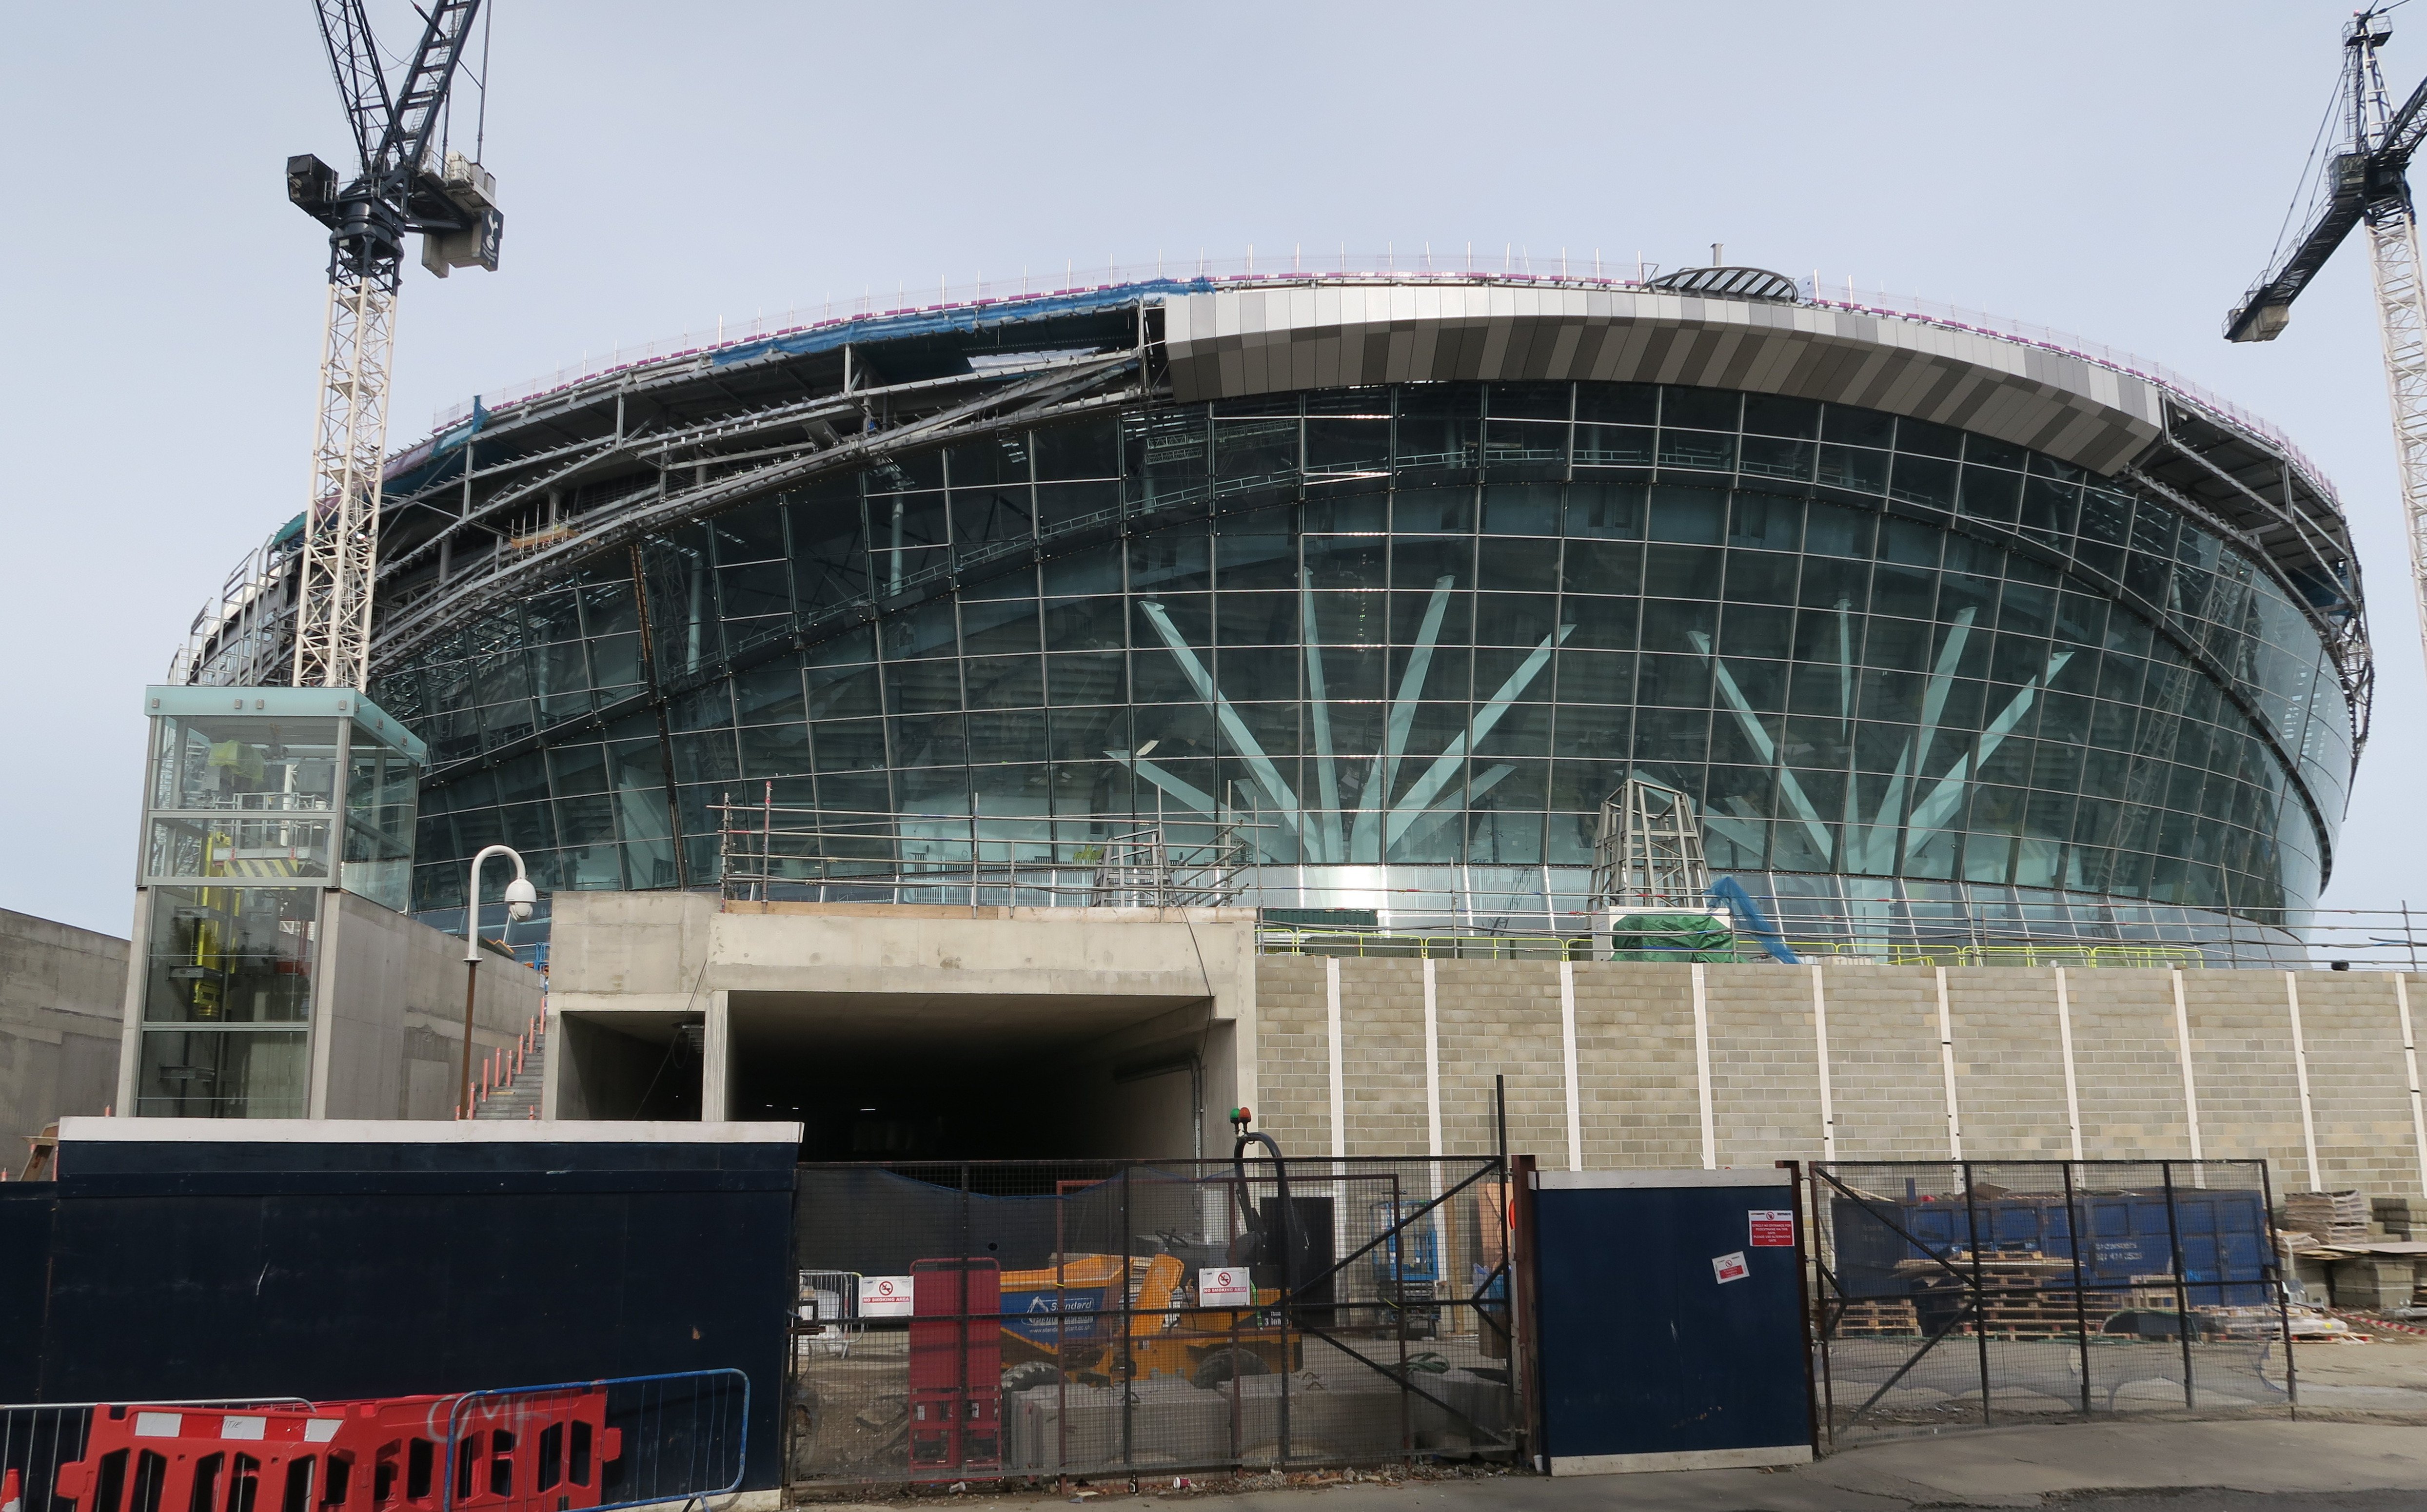 More information about "Timelapse από την κατασκευή του νέου γηπέδου της Tottenham Hotspur"